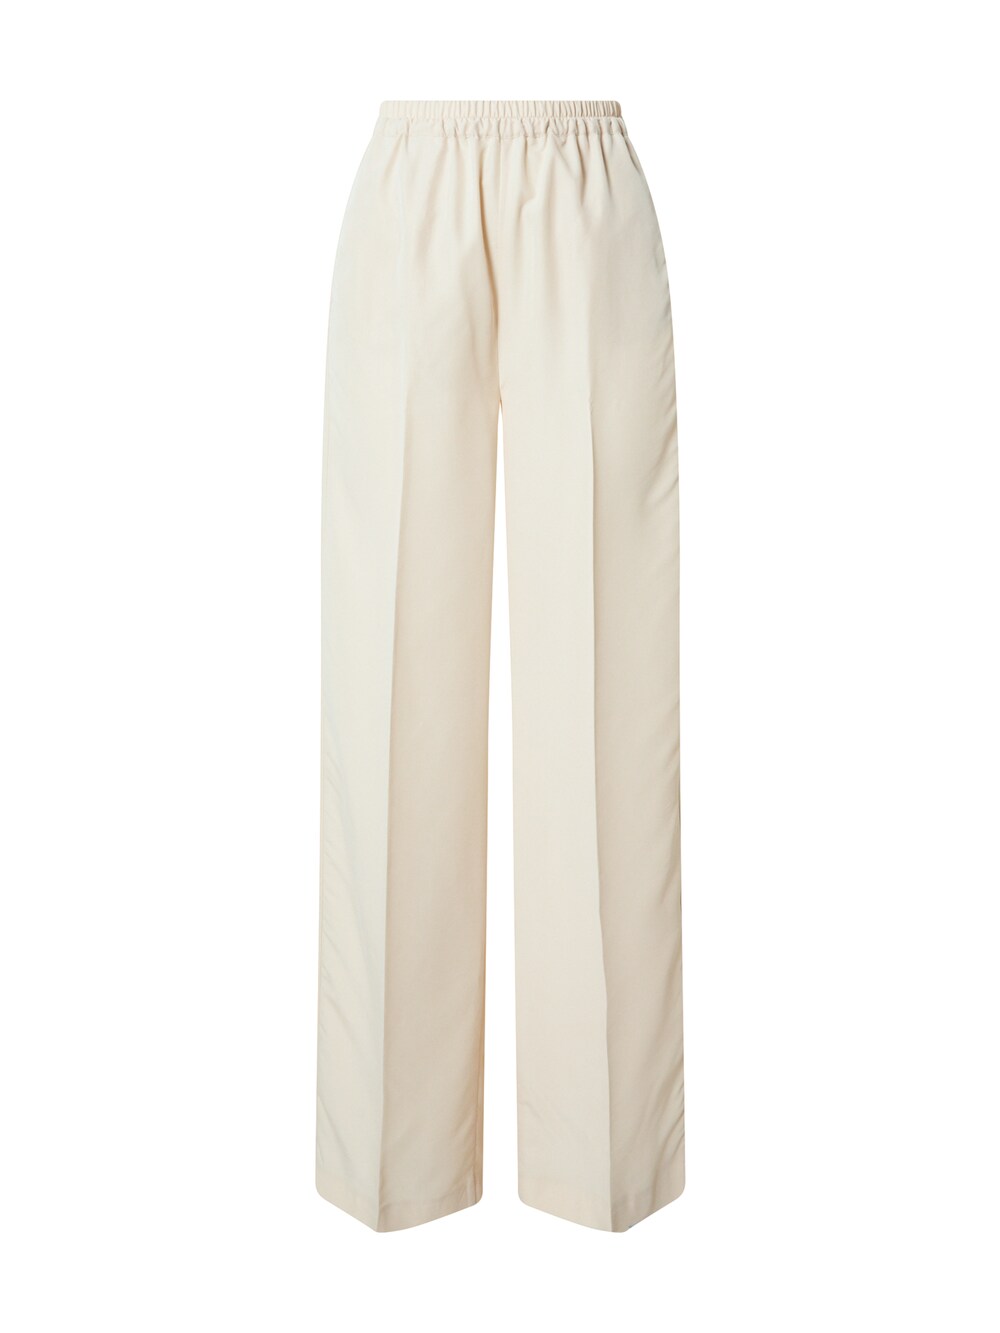 Широкие брюки со складками Sisley, бежевый широкие брюки со складками misspap бежевый